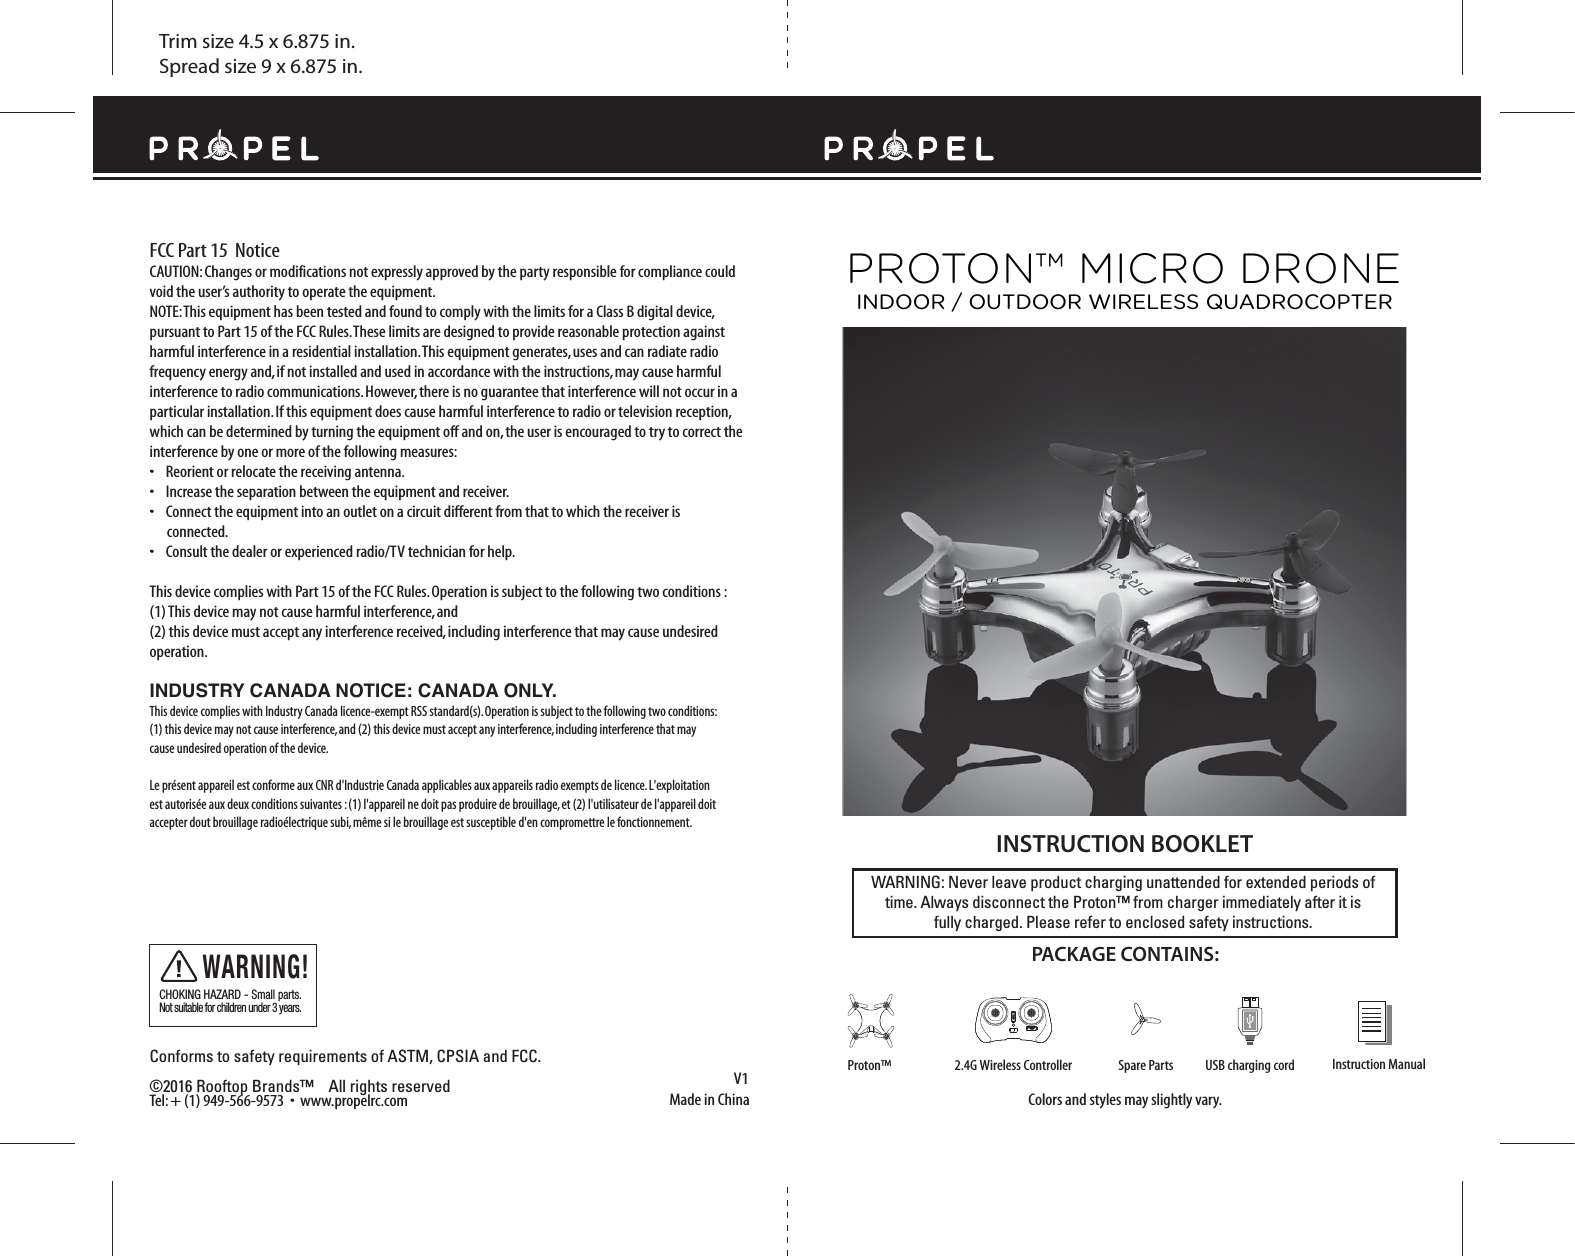 Cobra rc micro drone instruction manual